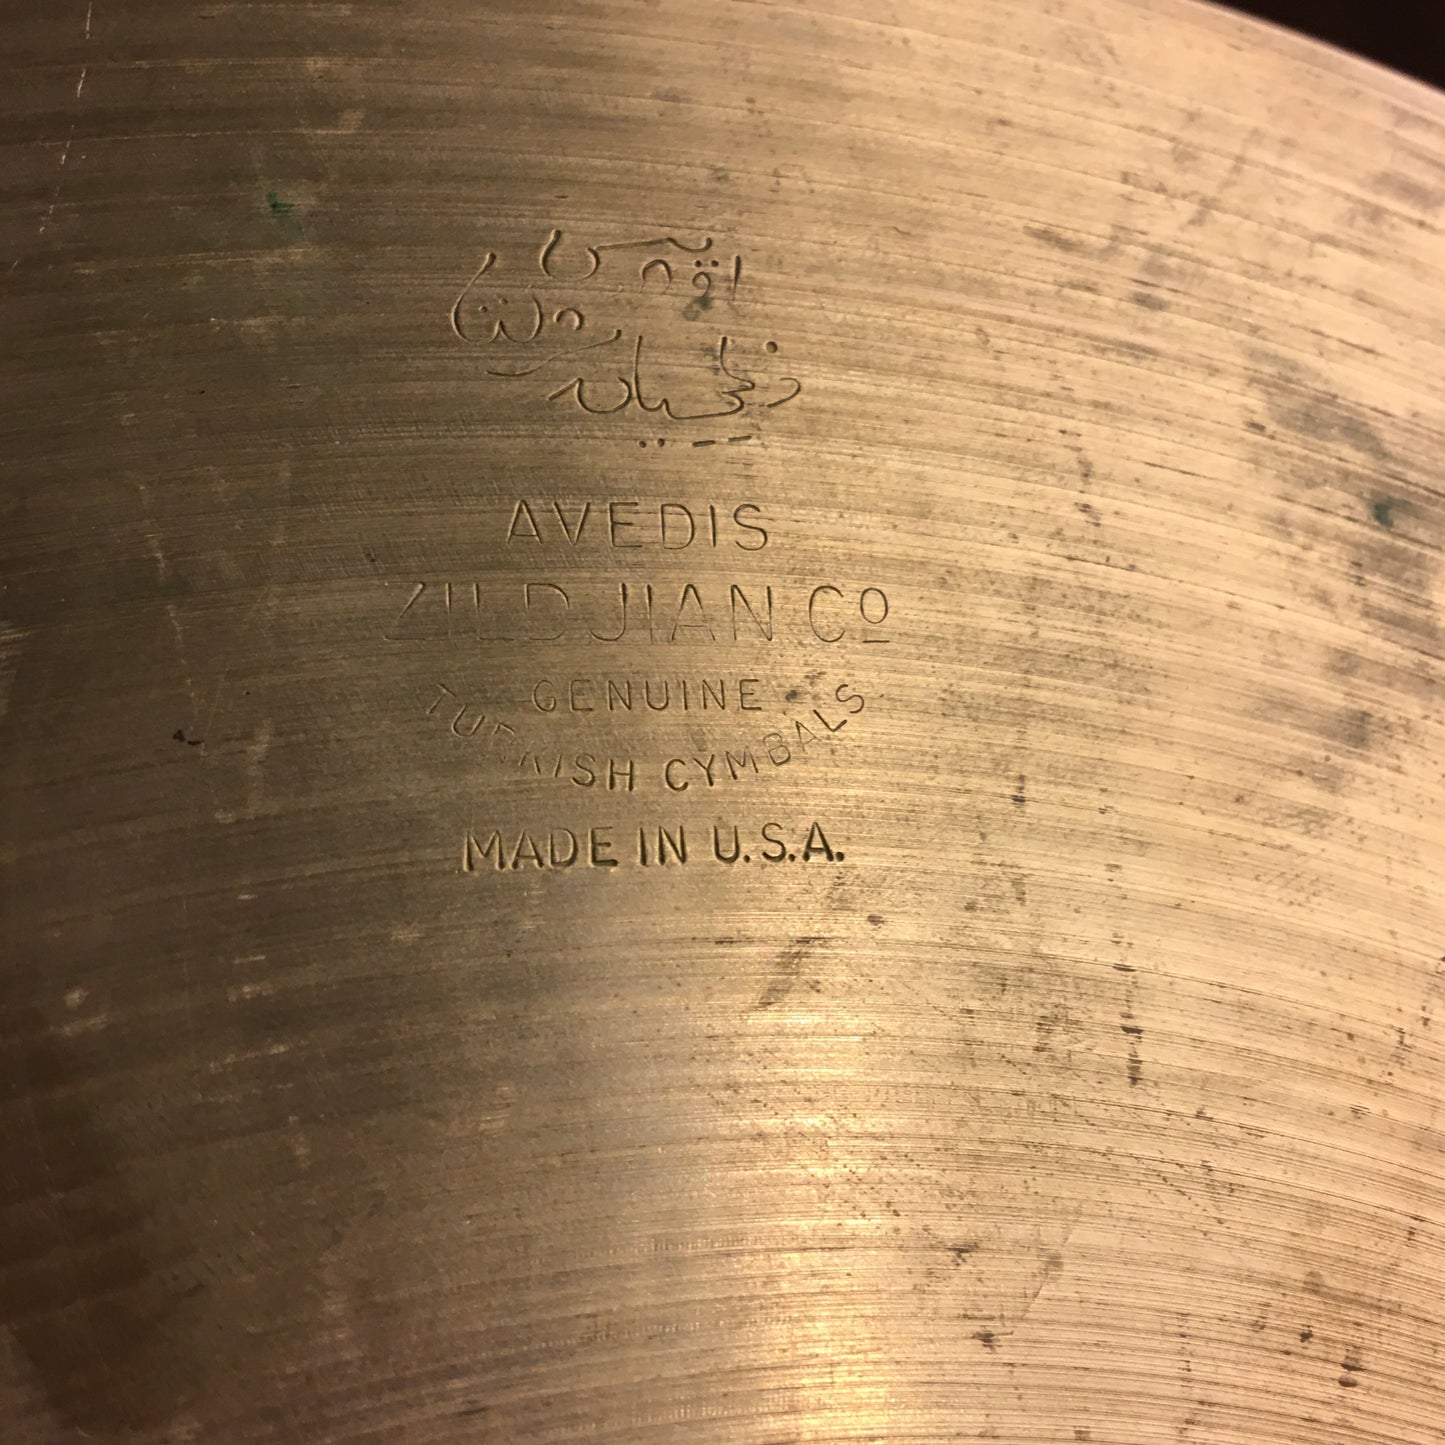 14" Pair of 1970's Zildjian A Hi-Hat Cymbals 856g / 1290g - Inventory # 69